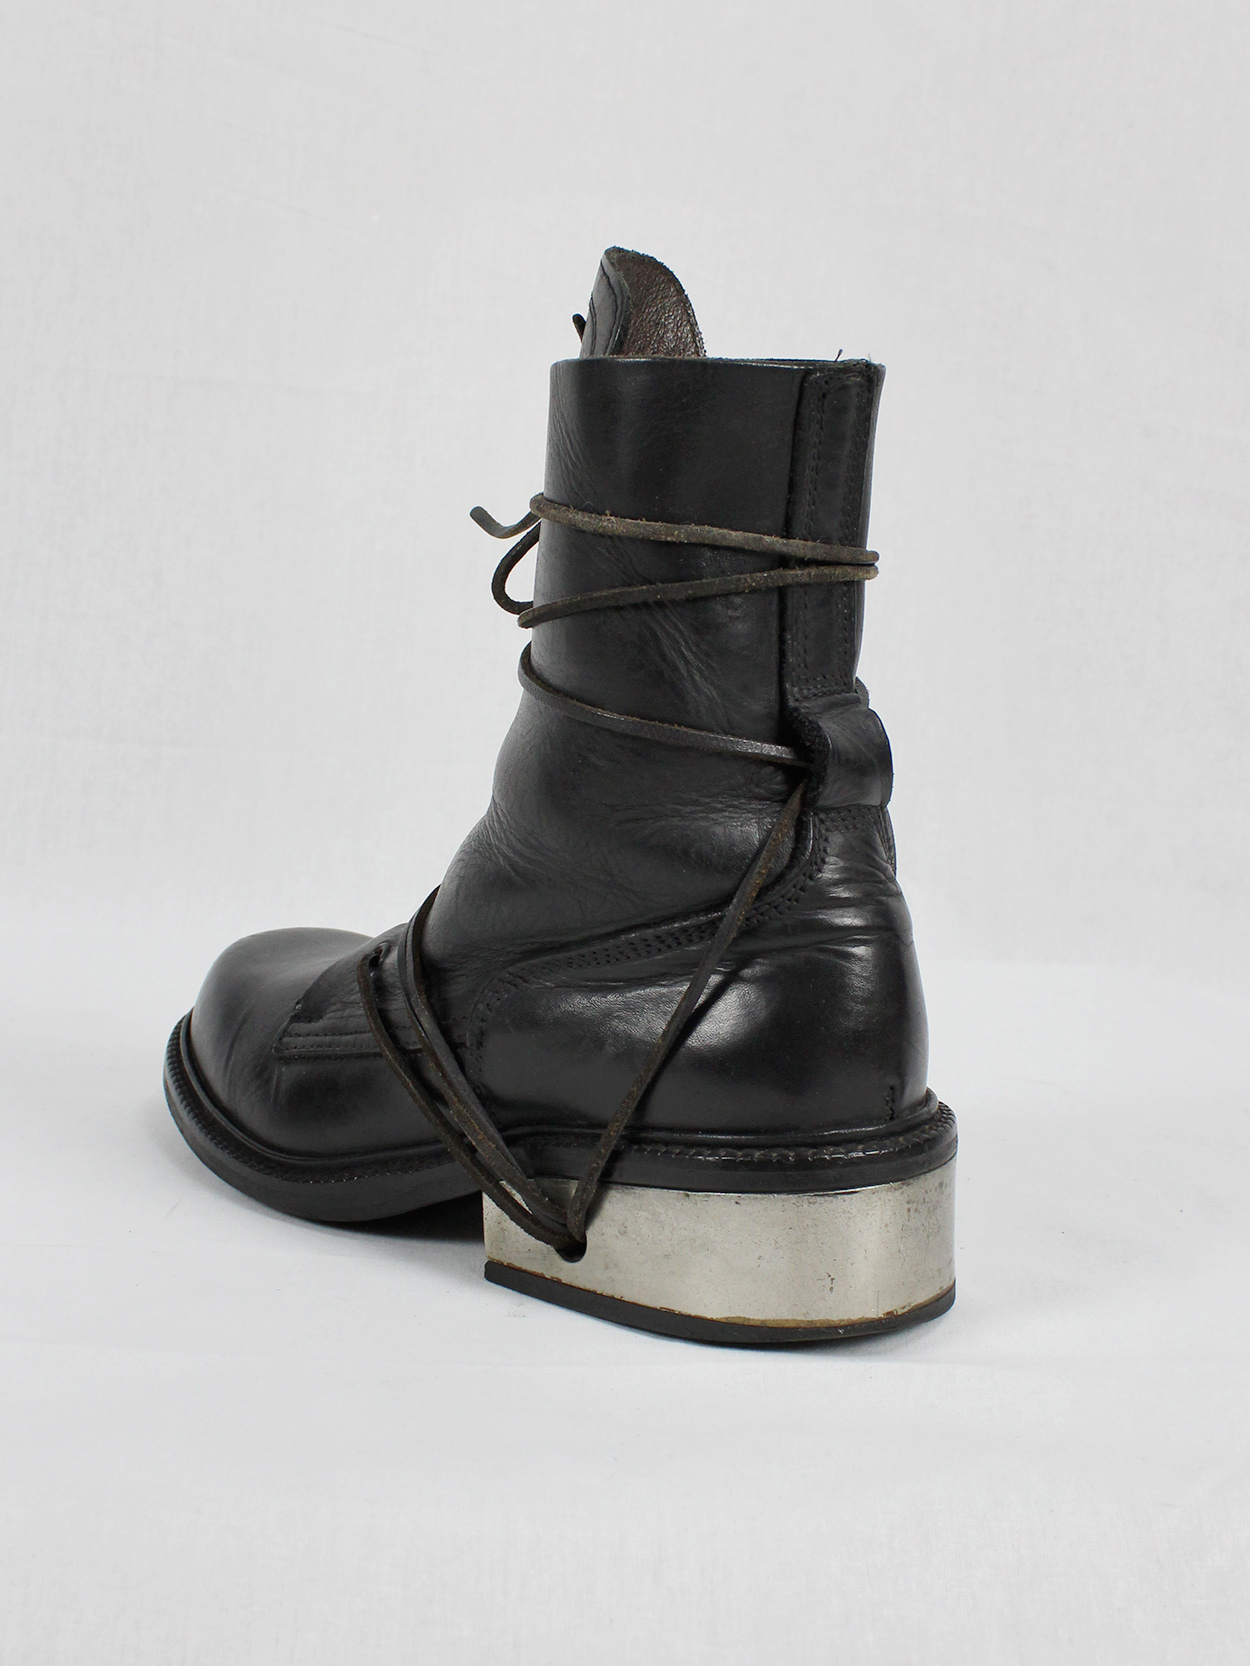 vaniitas Dirk Bikkembergs black tall boots with laces through the metal heel 90s (15)